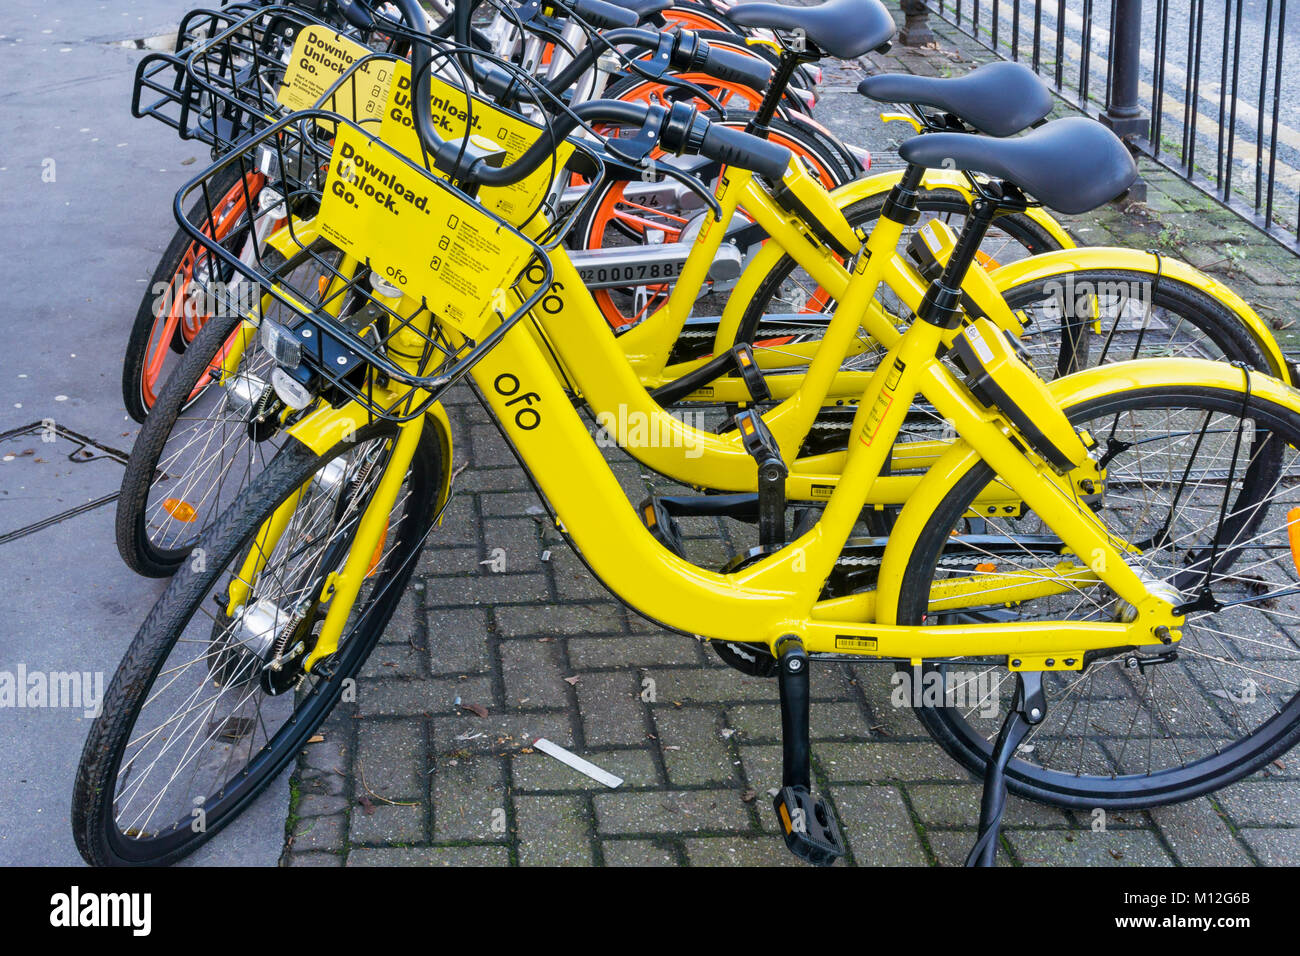 Ofo Dock - Kostenlose Fahrräder in London. Stockfoto